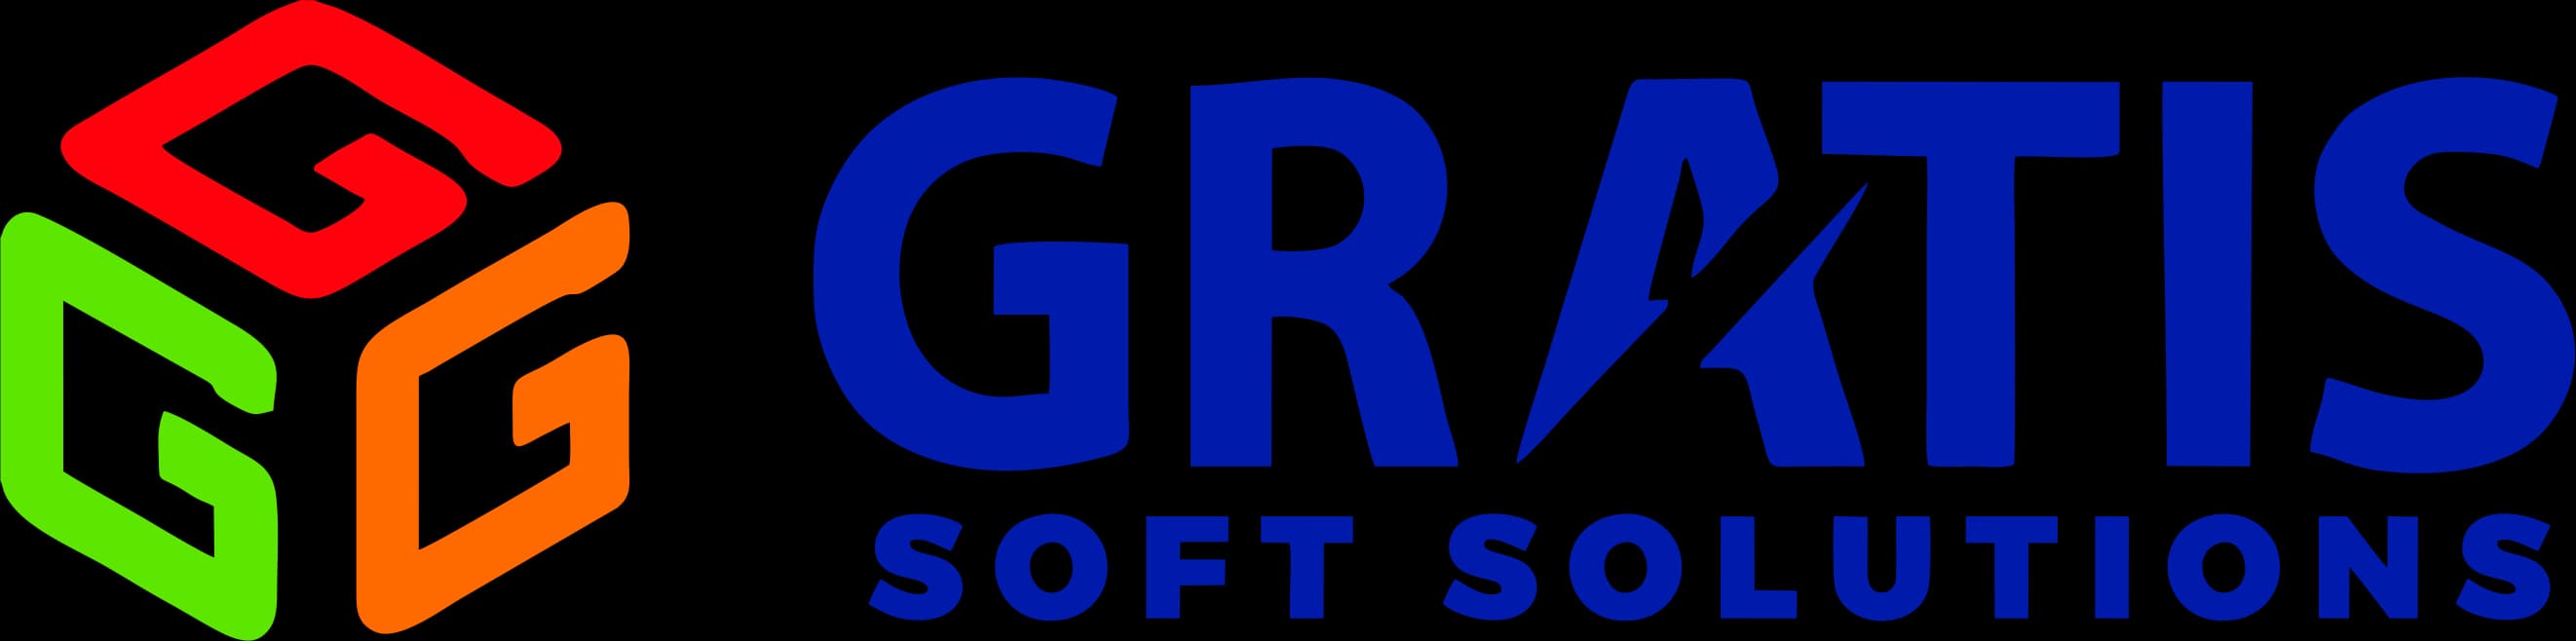 Gratis Soft Solutions's logo